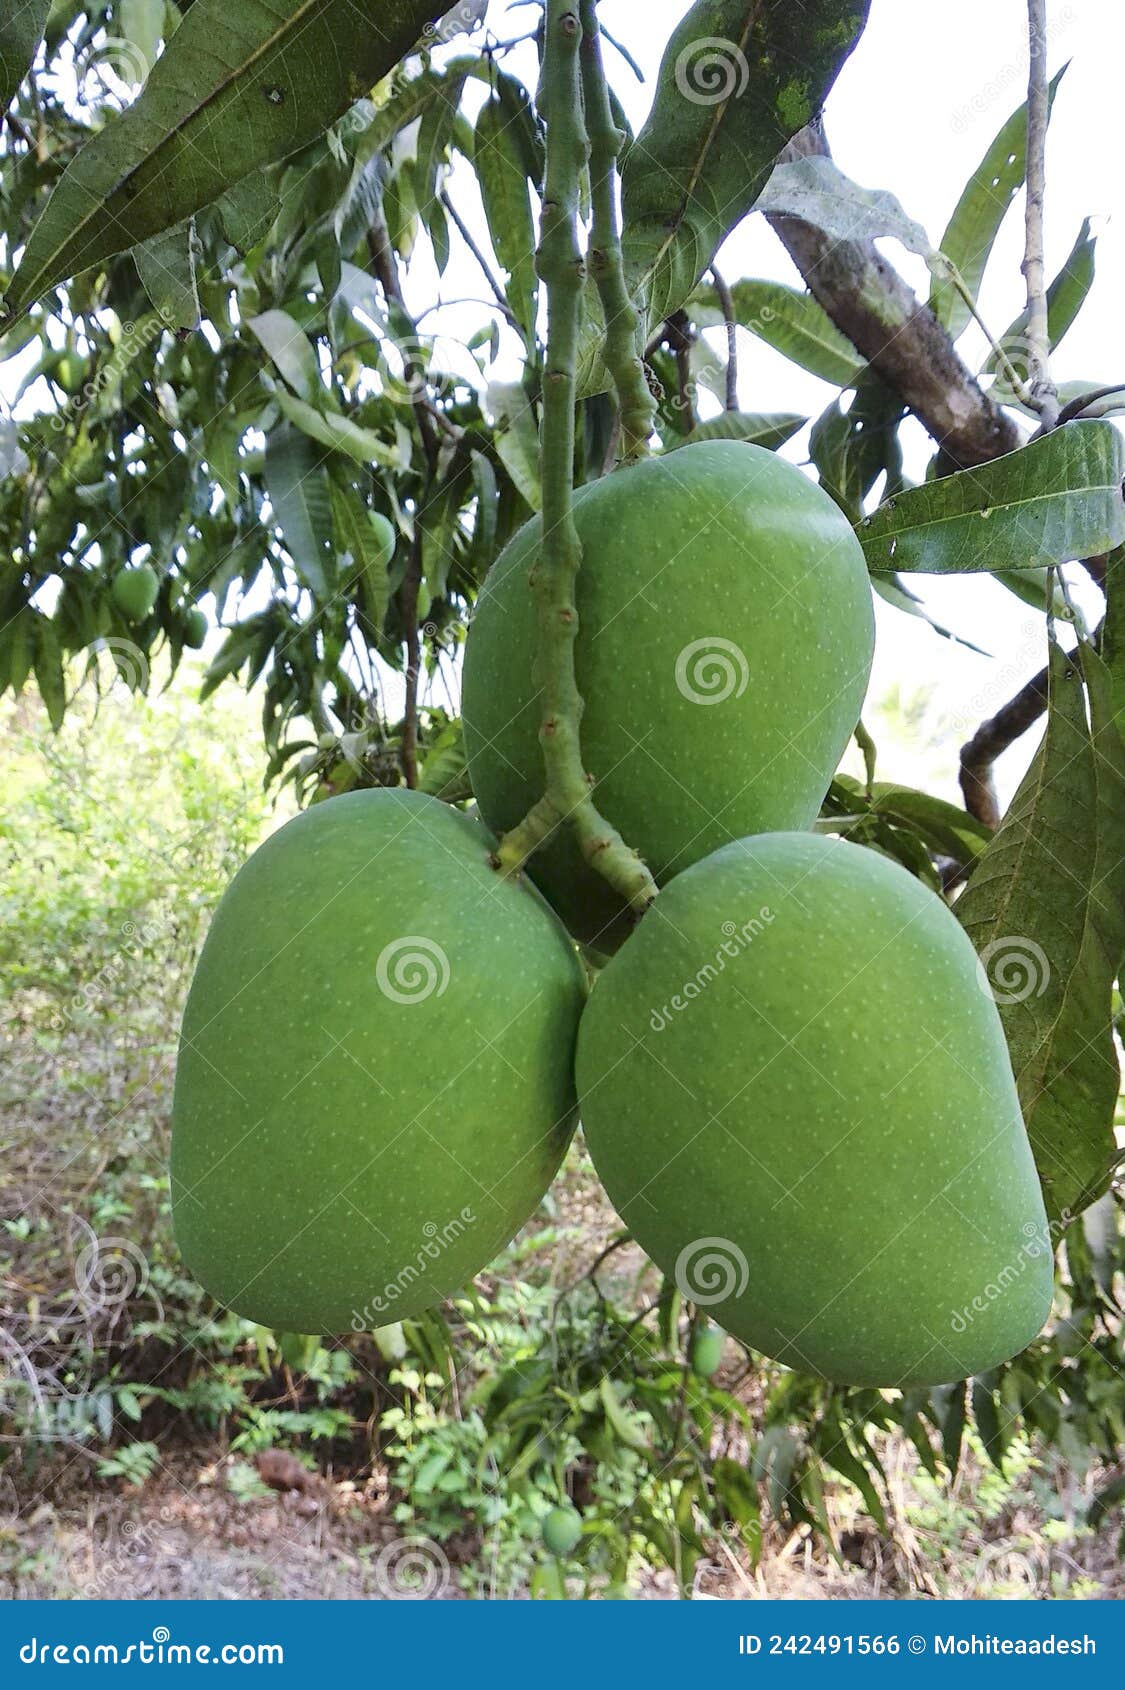 hanging green hapus mango on tree.